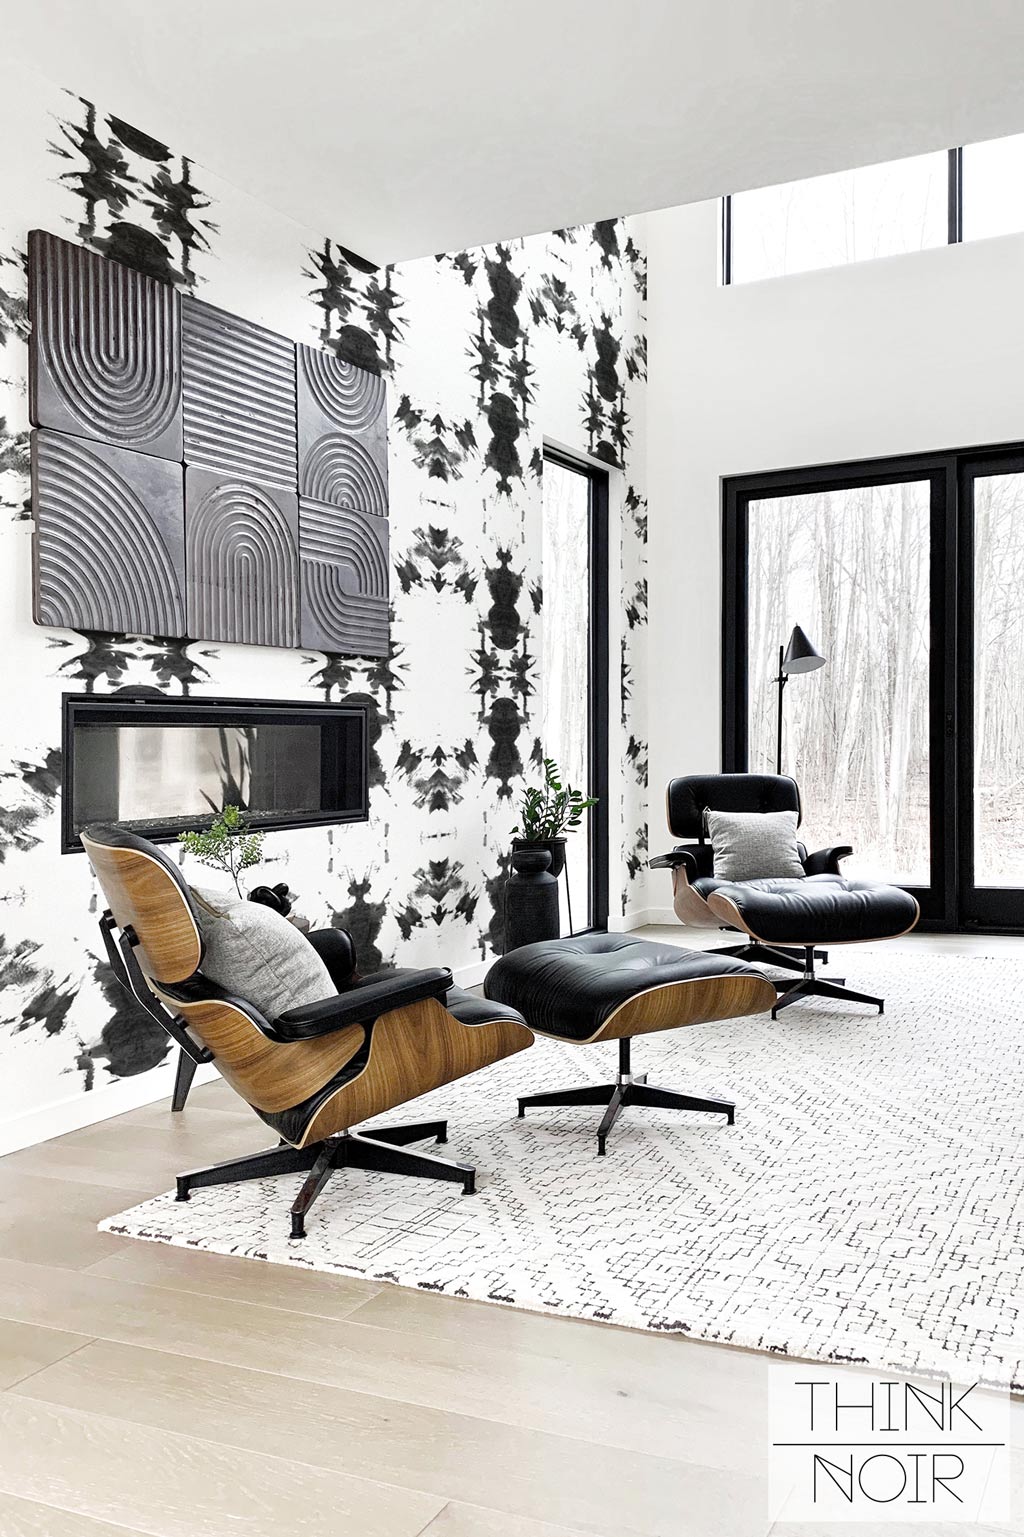 wallpaper design motif inspired Shibori textile art  Interior Design Ideas   Ofdesign